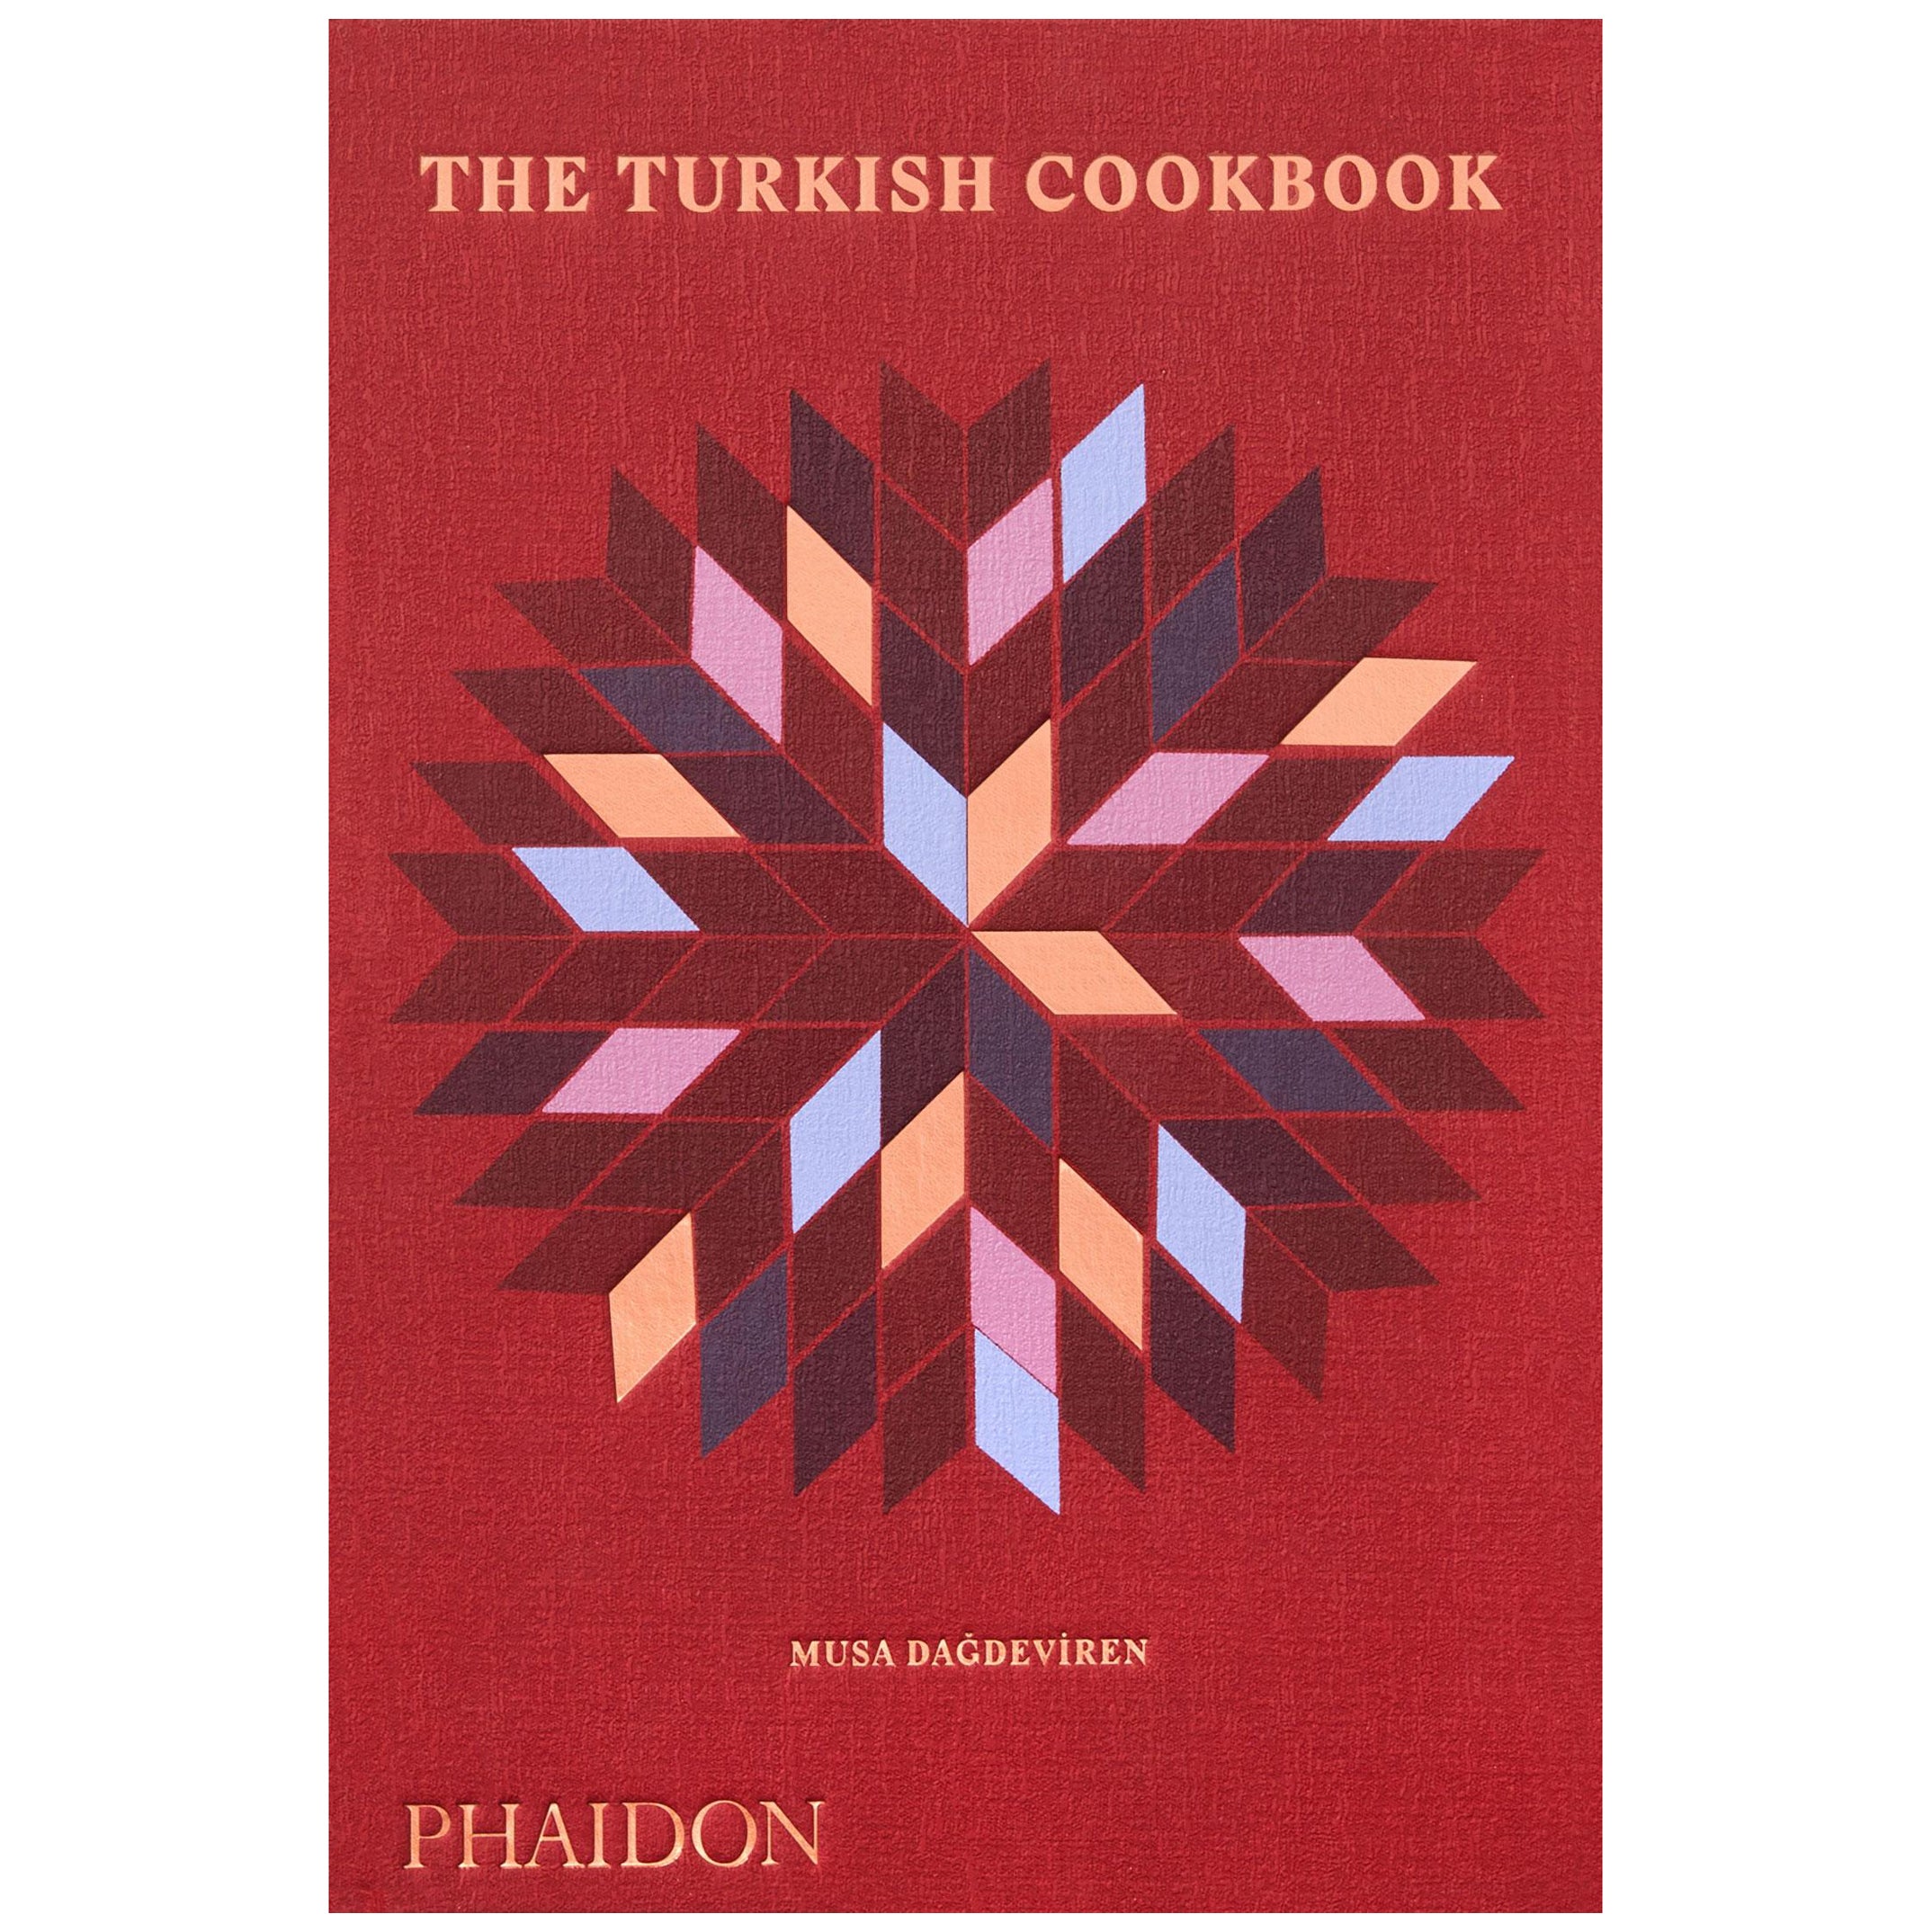 Turkish Cookbook For Sale